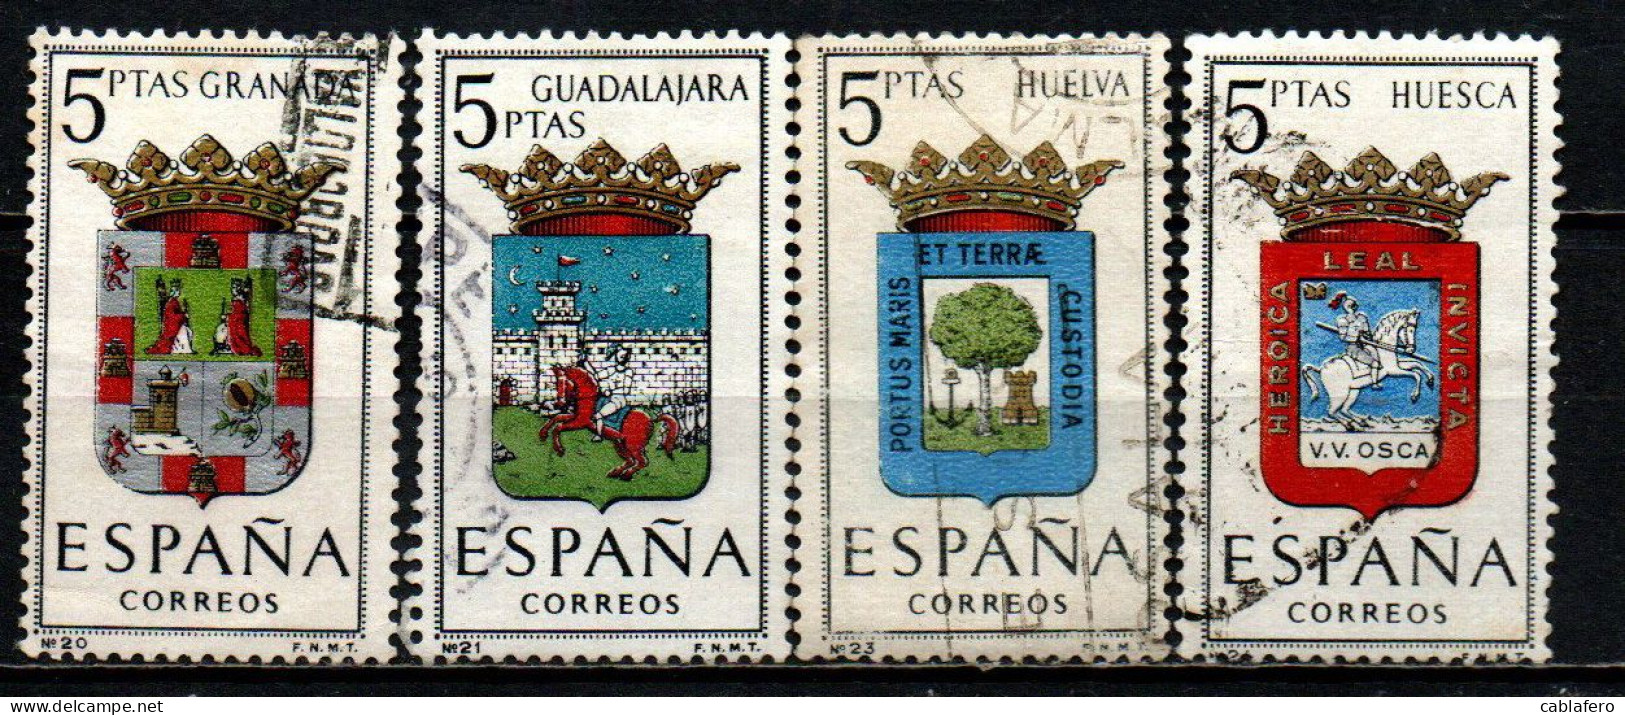 SPAGNA - 1963 - STEMMI DELLE PROVINCE SPAGNOLE: GRANADA, GUADALAJARA, HUELVA, HUESCA - USATI - Gebruikt